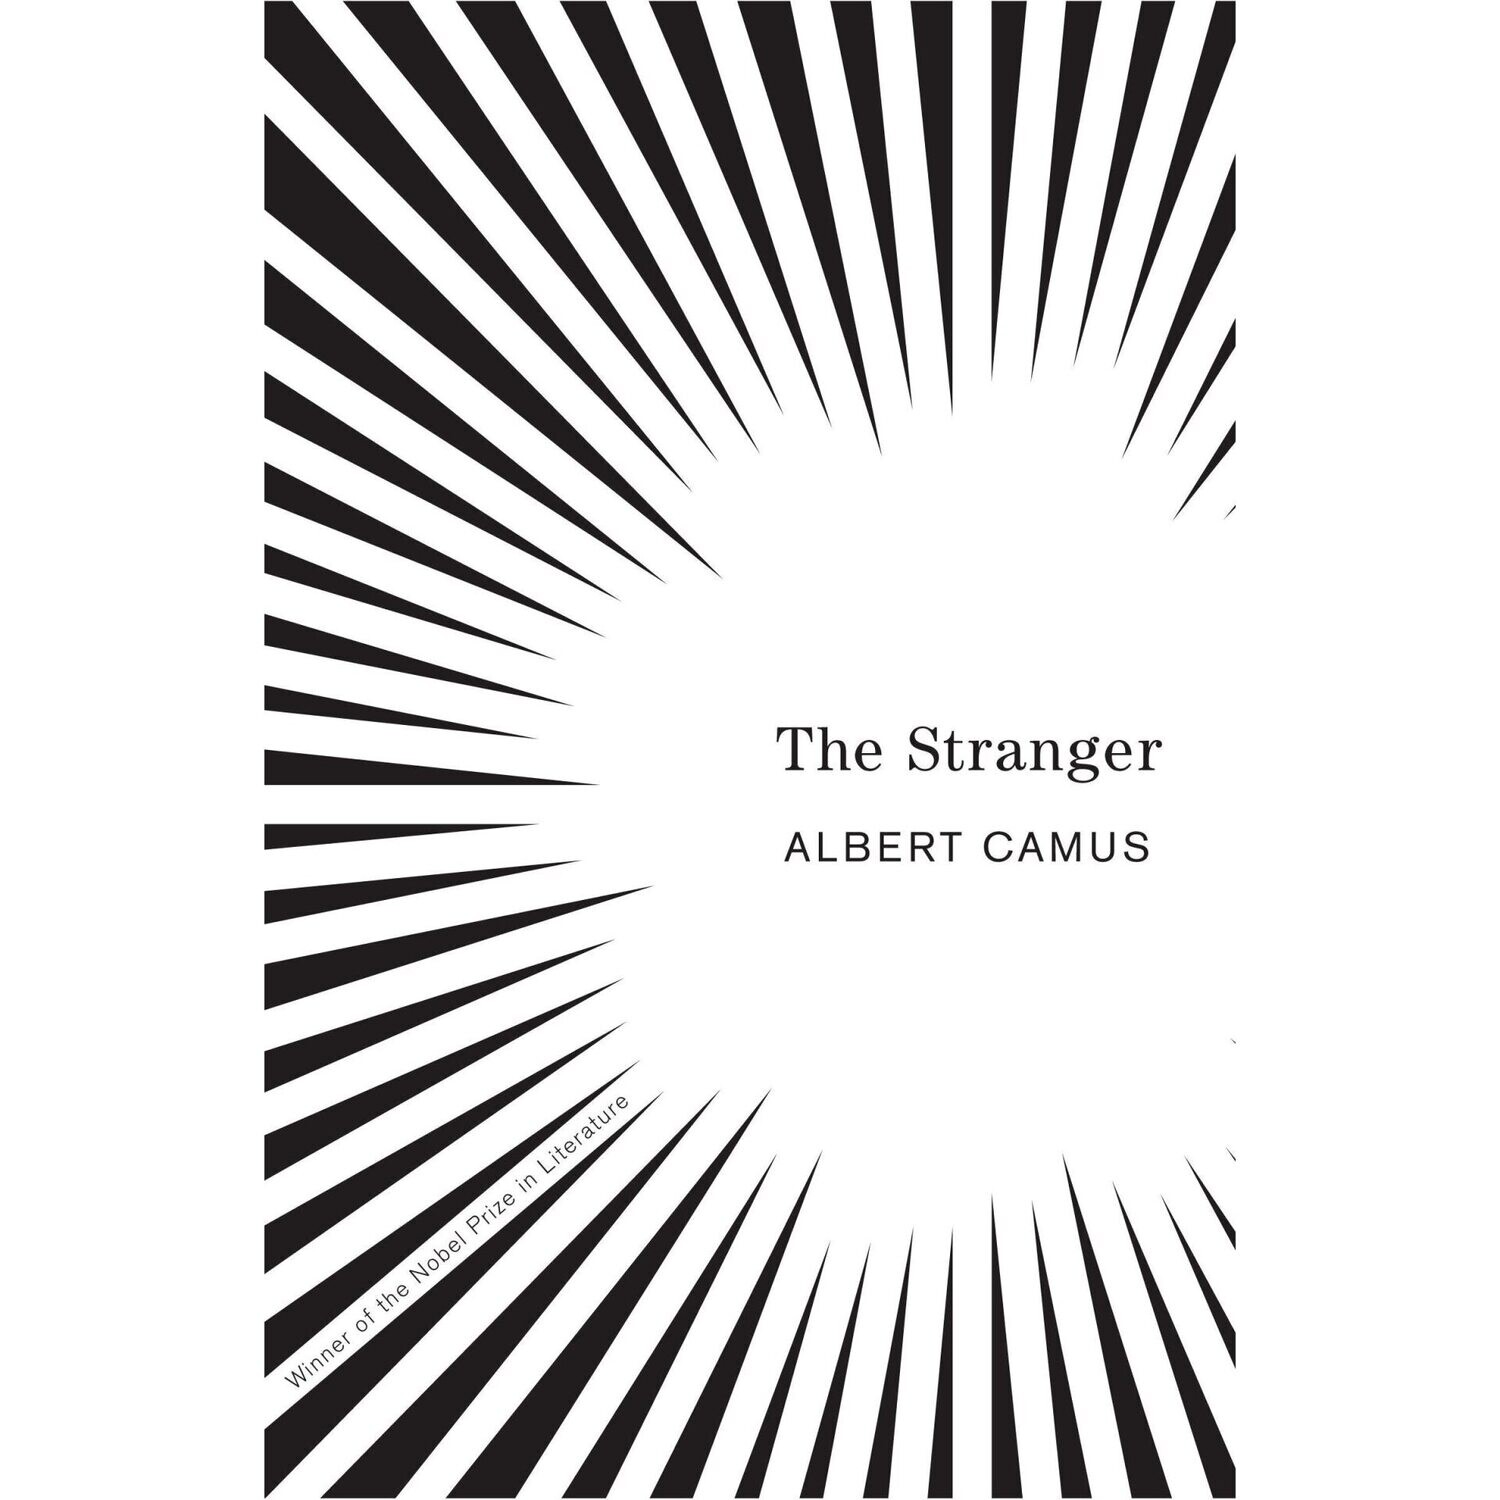 the stranger and the meursault investigation essay